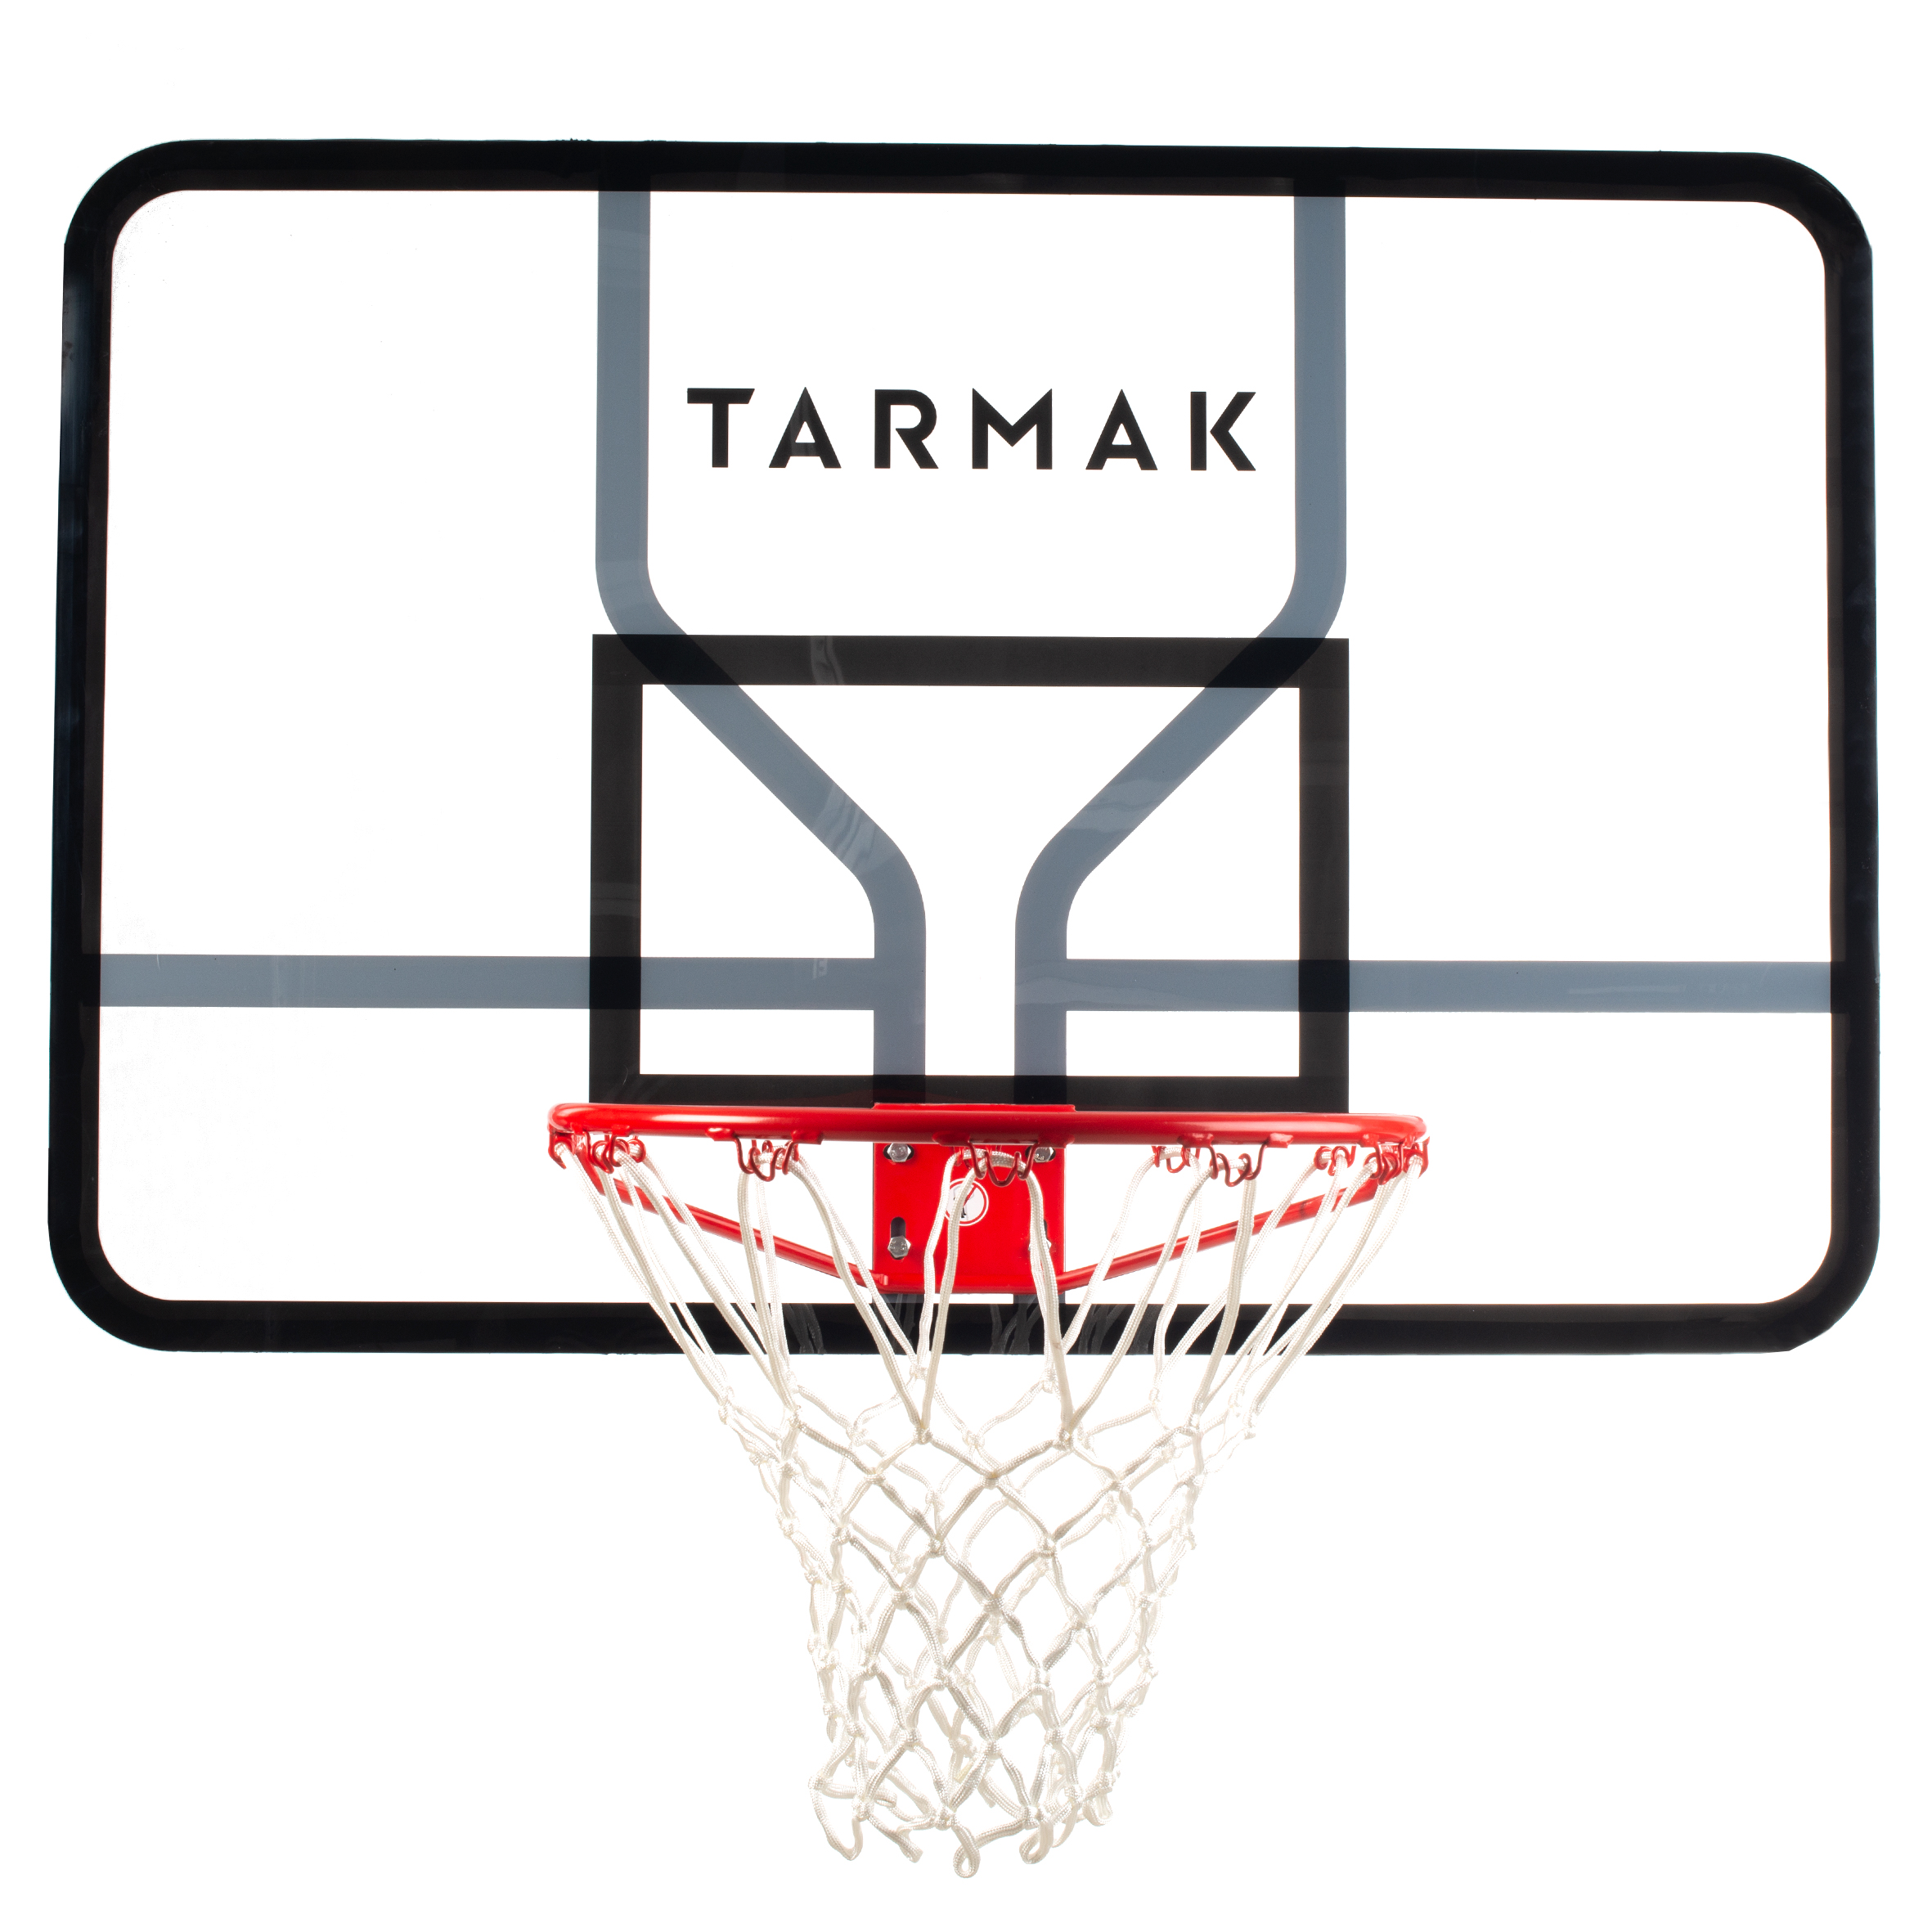 Planche De Basket-ball De Porte, Panier De Basket-ball Intérieur